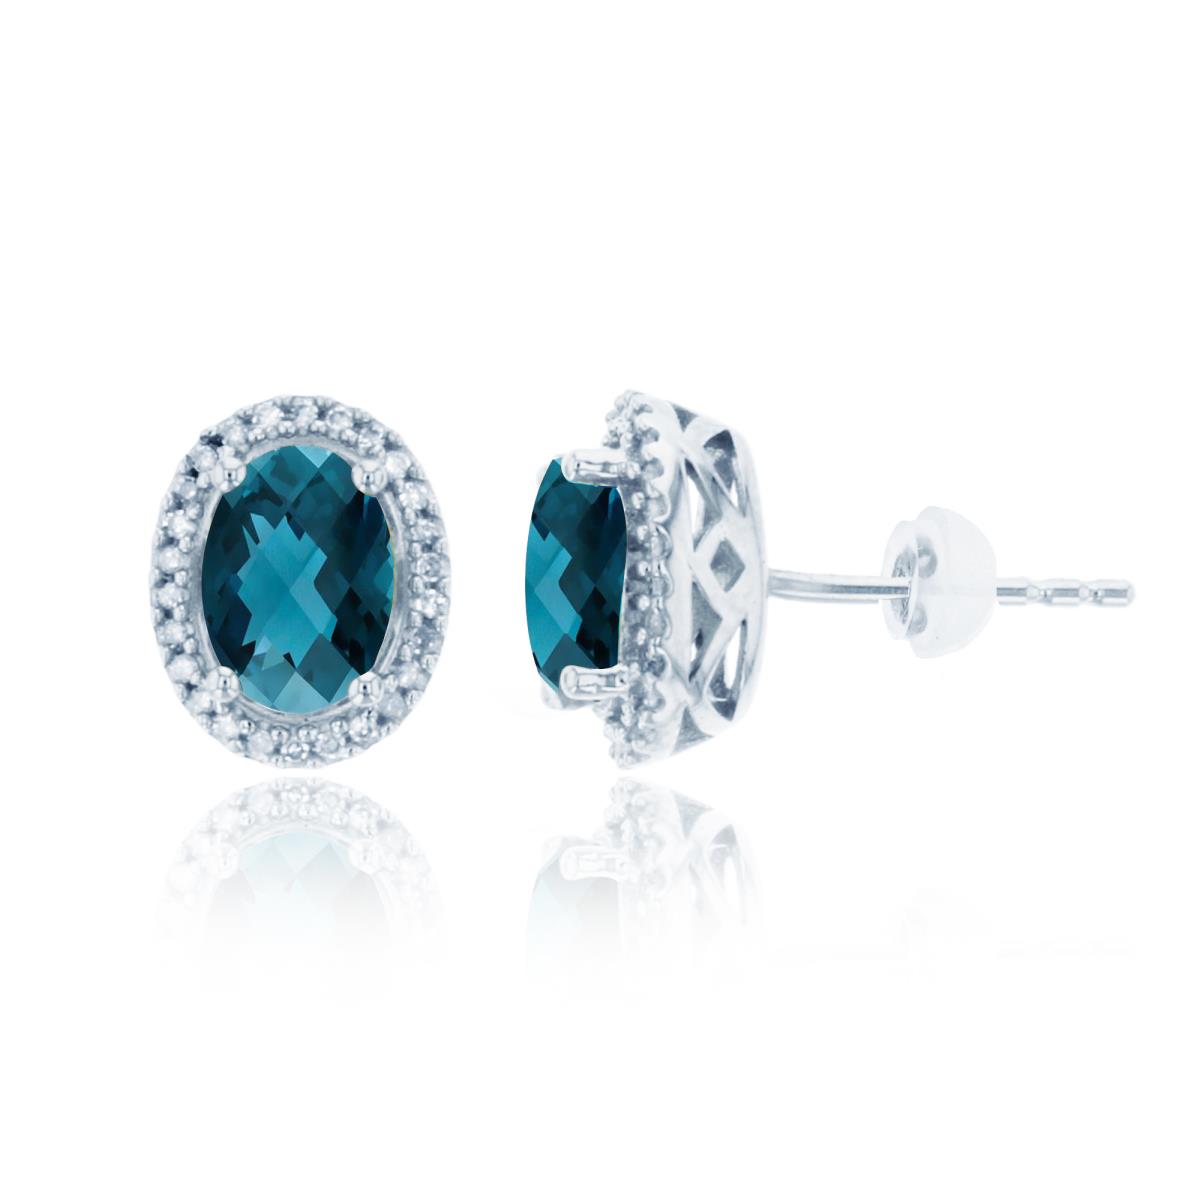 14K White Gold 0.16cttw Rnd Diamonds & 7x5mm Ov London Blue Topaz Halo Earrings